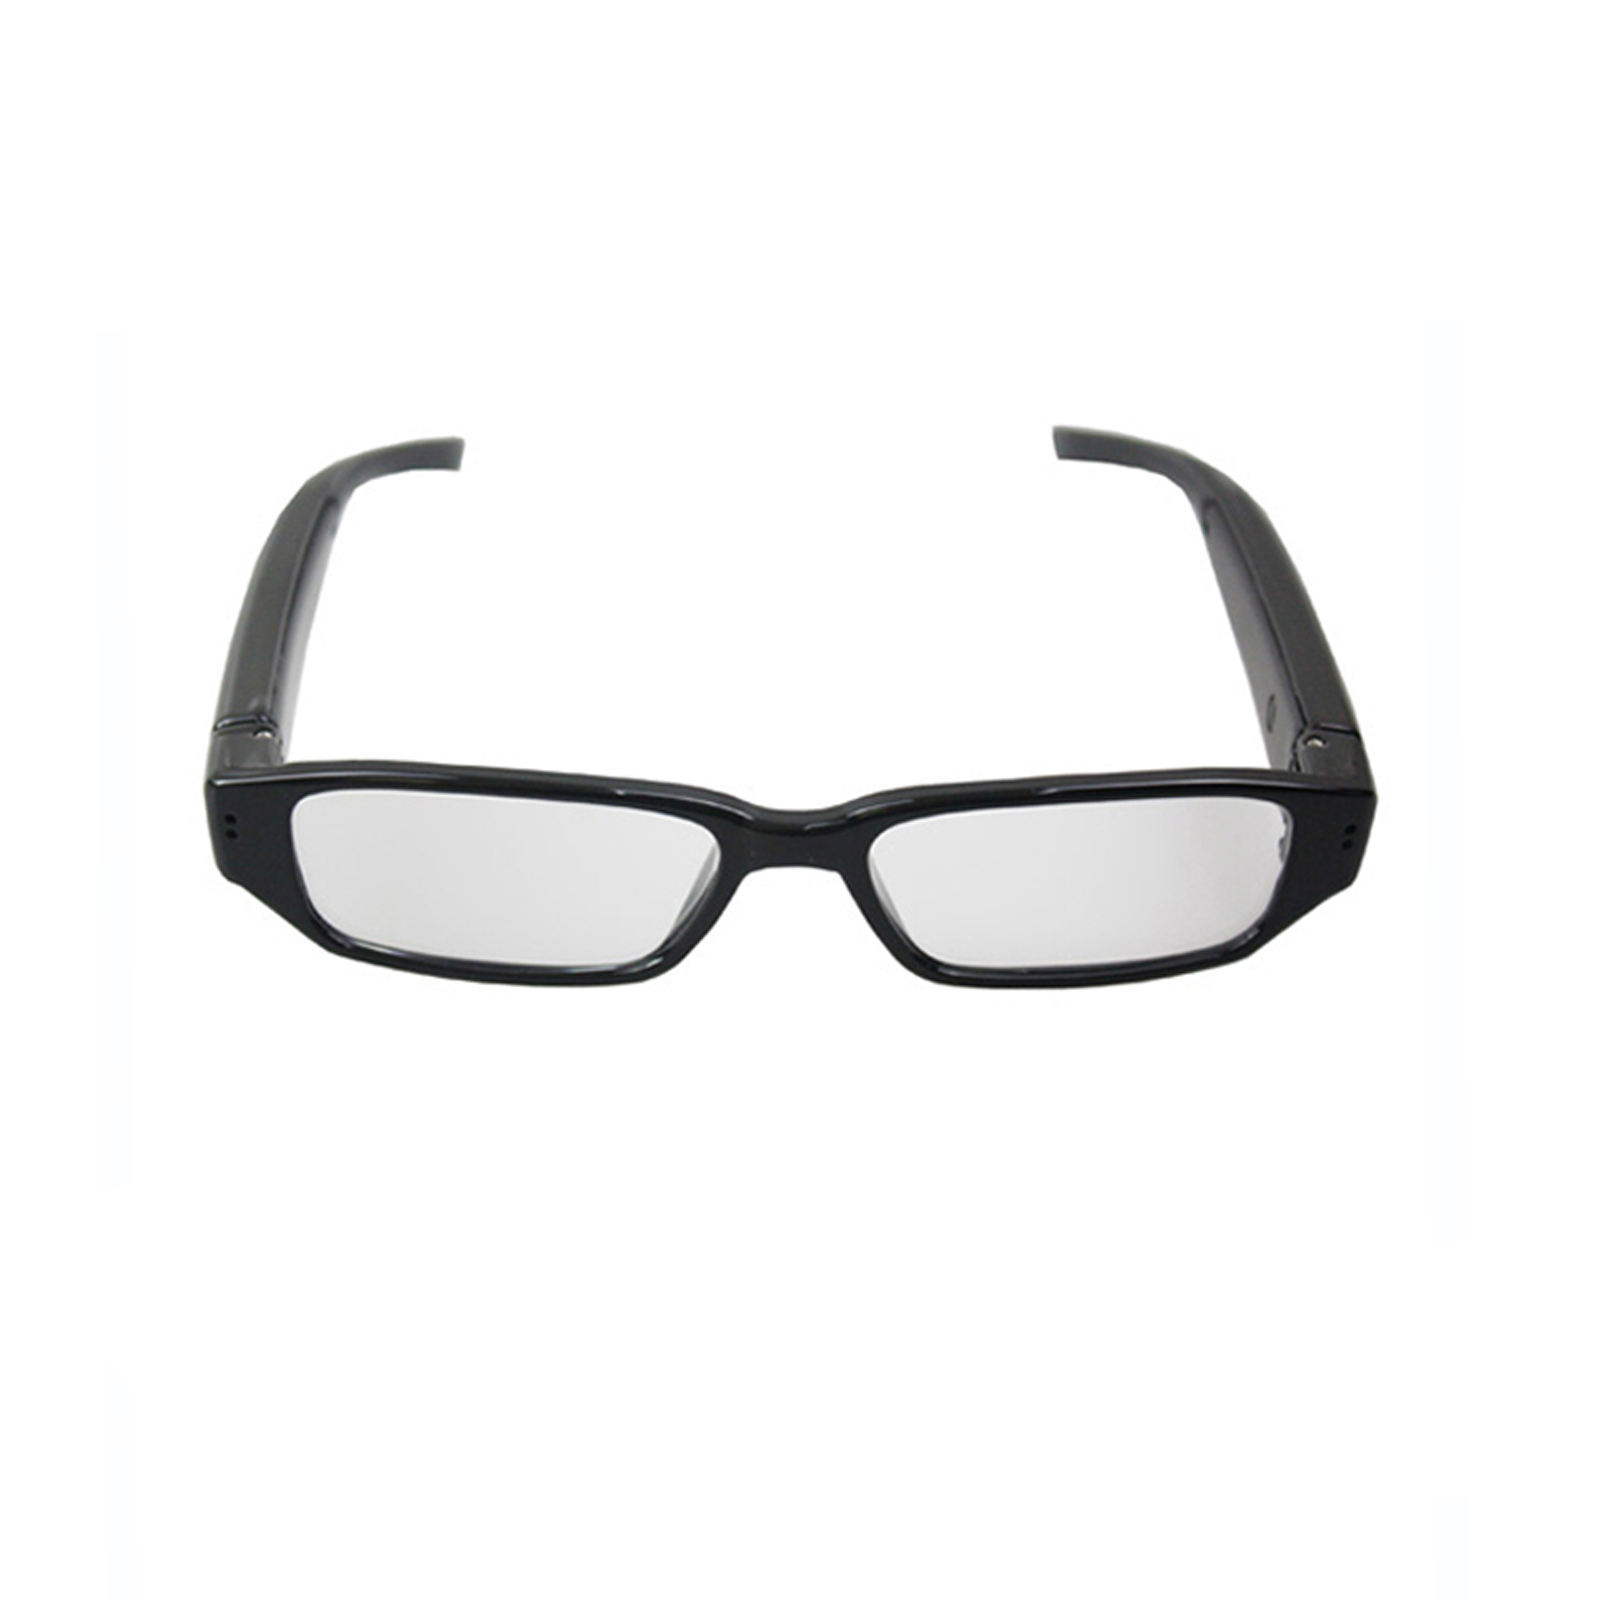 Brille HD mit Kamera Spionbrille Spy glasses   art.87000006